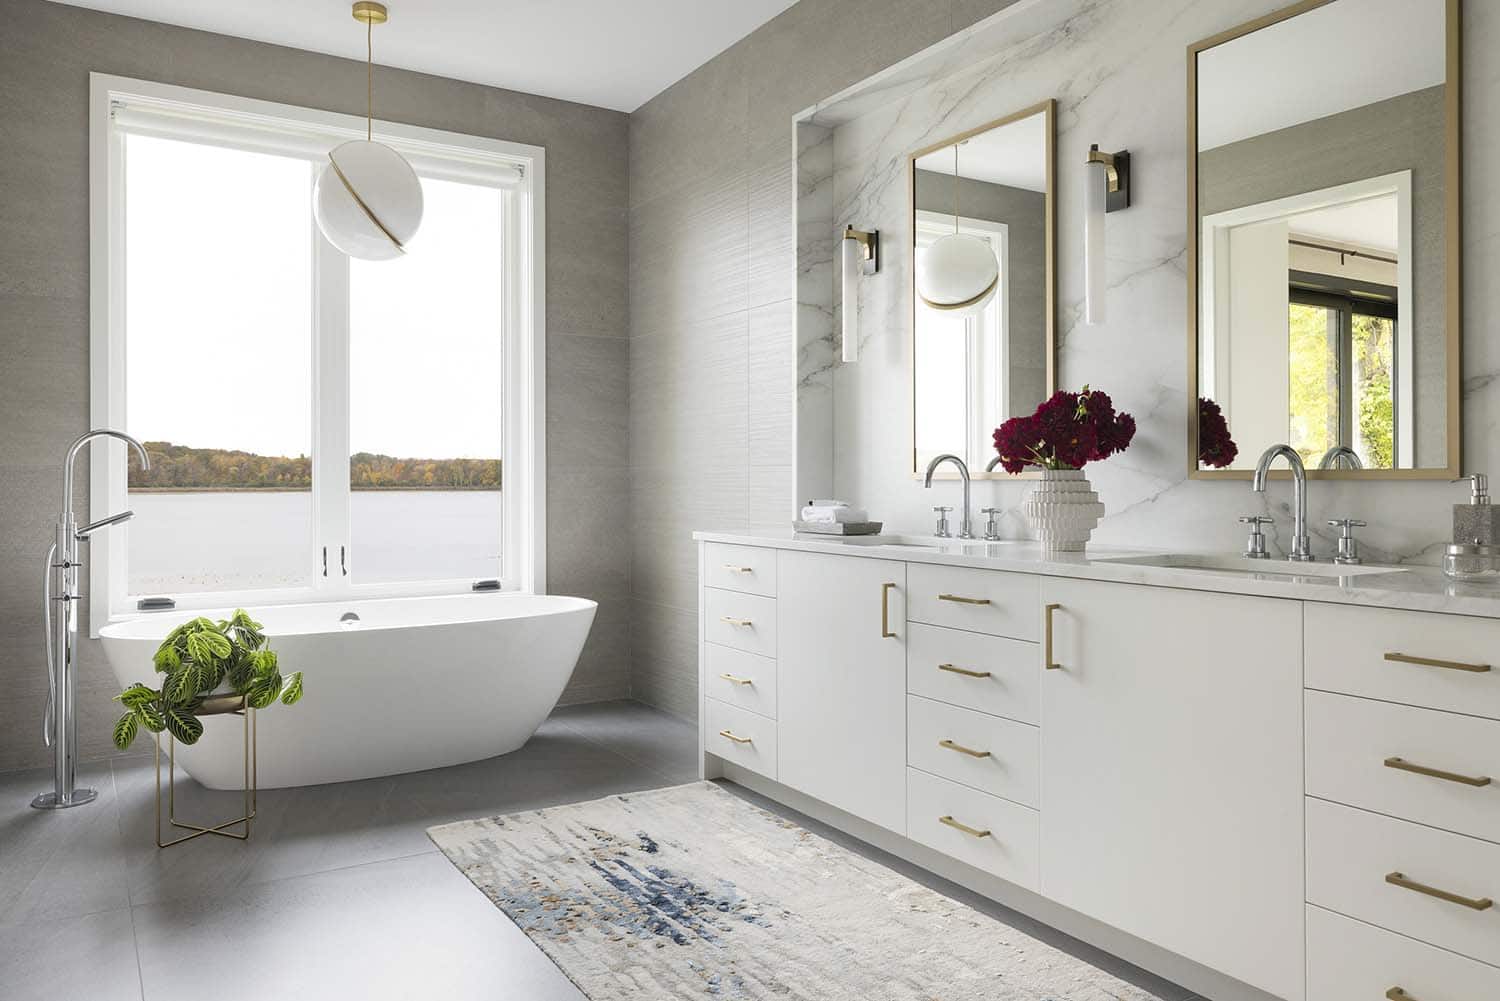 Scandinavian midcentury modern bathroom with a vanity and freestanding tub